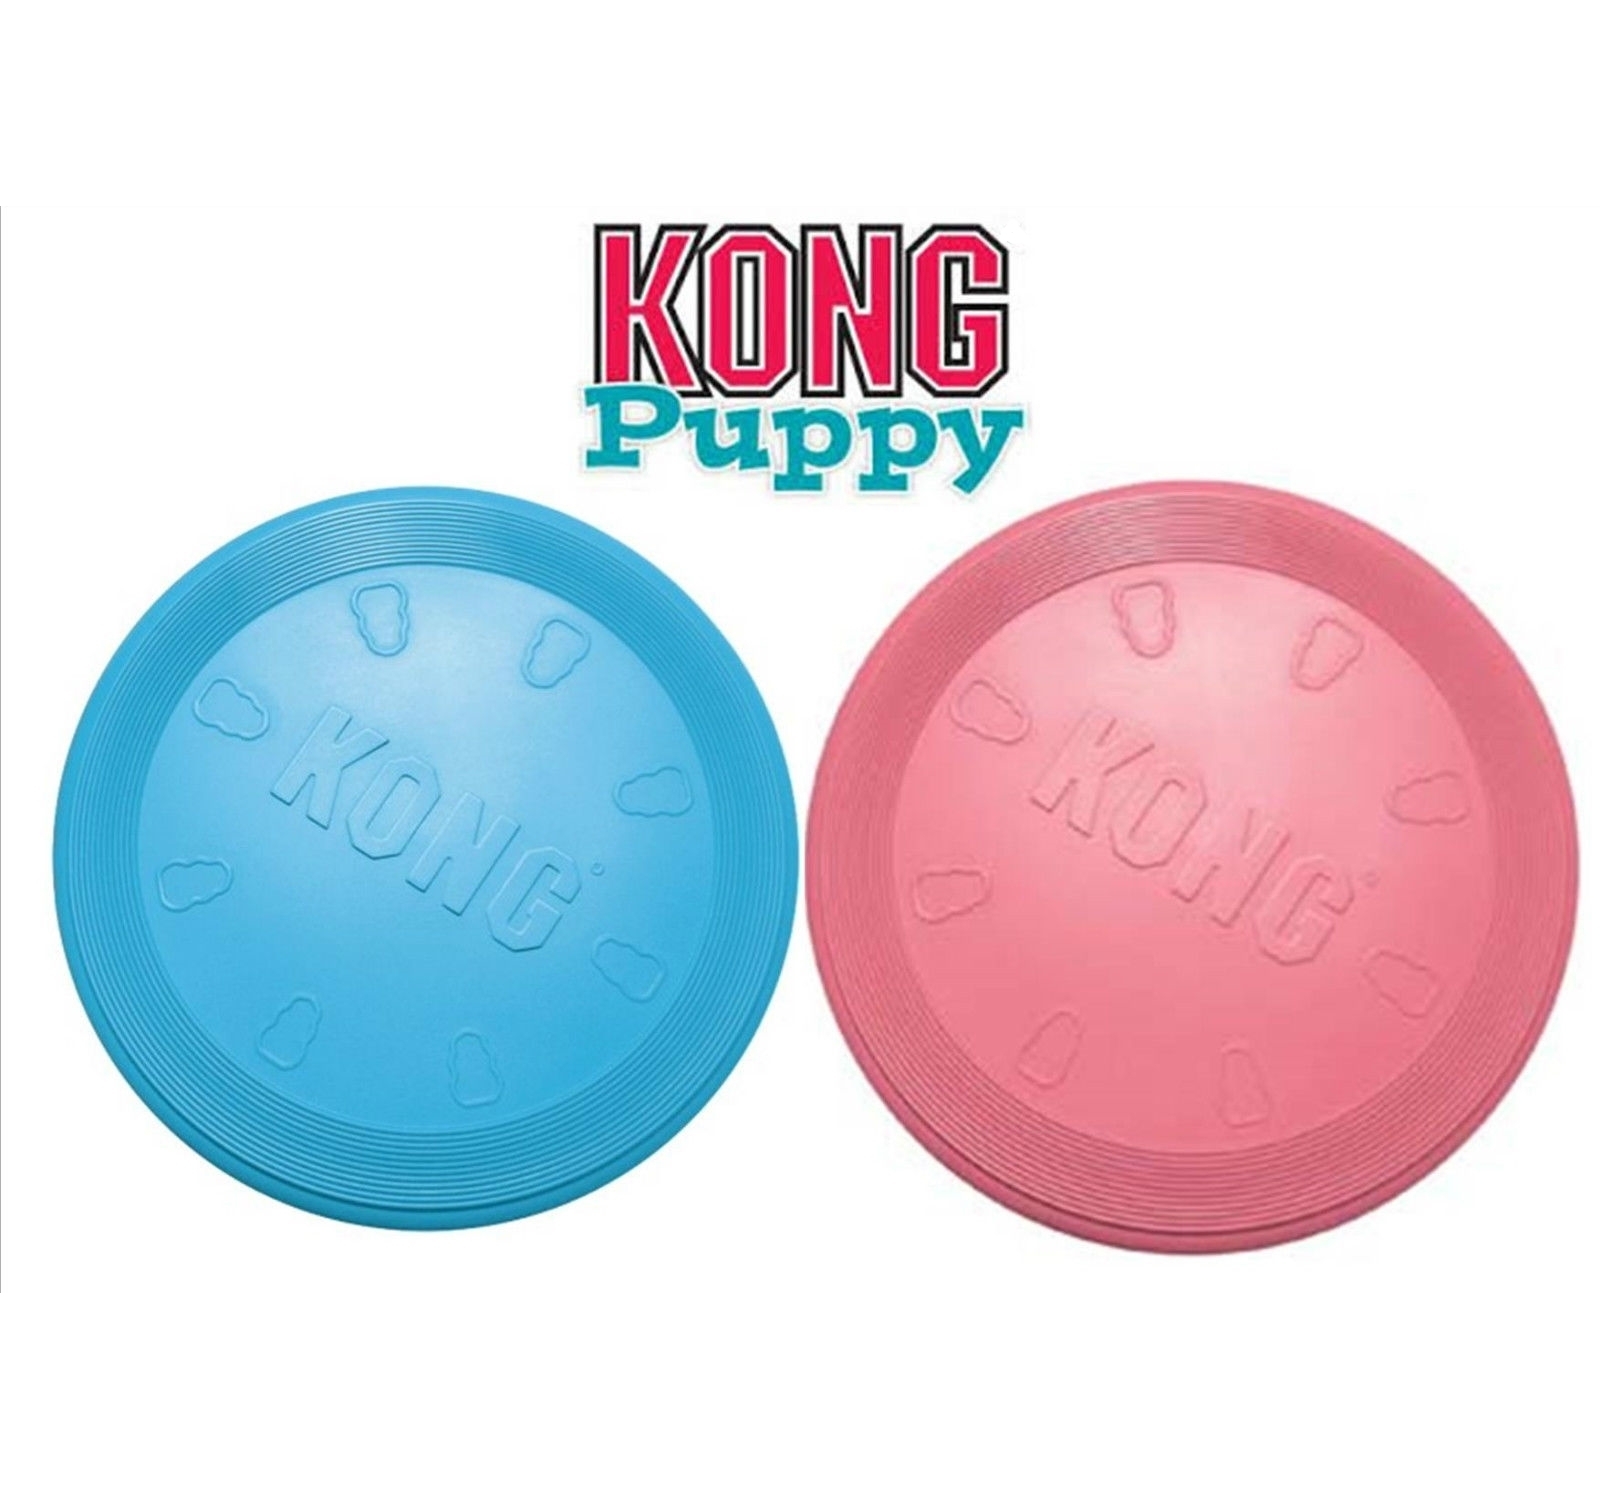 Kong Dog Frisbee